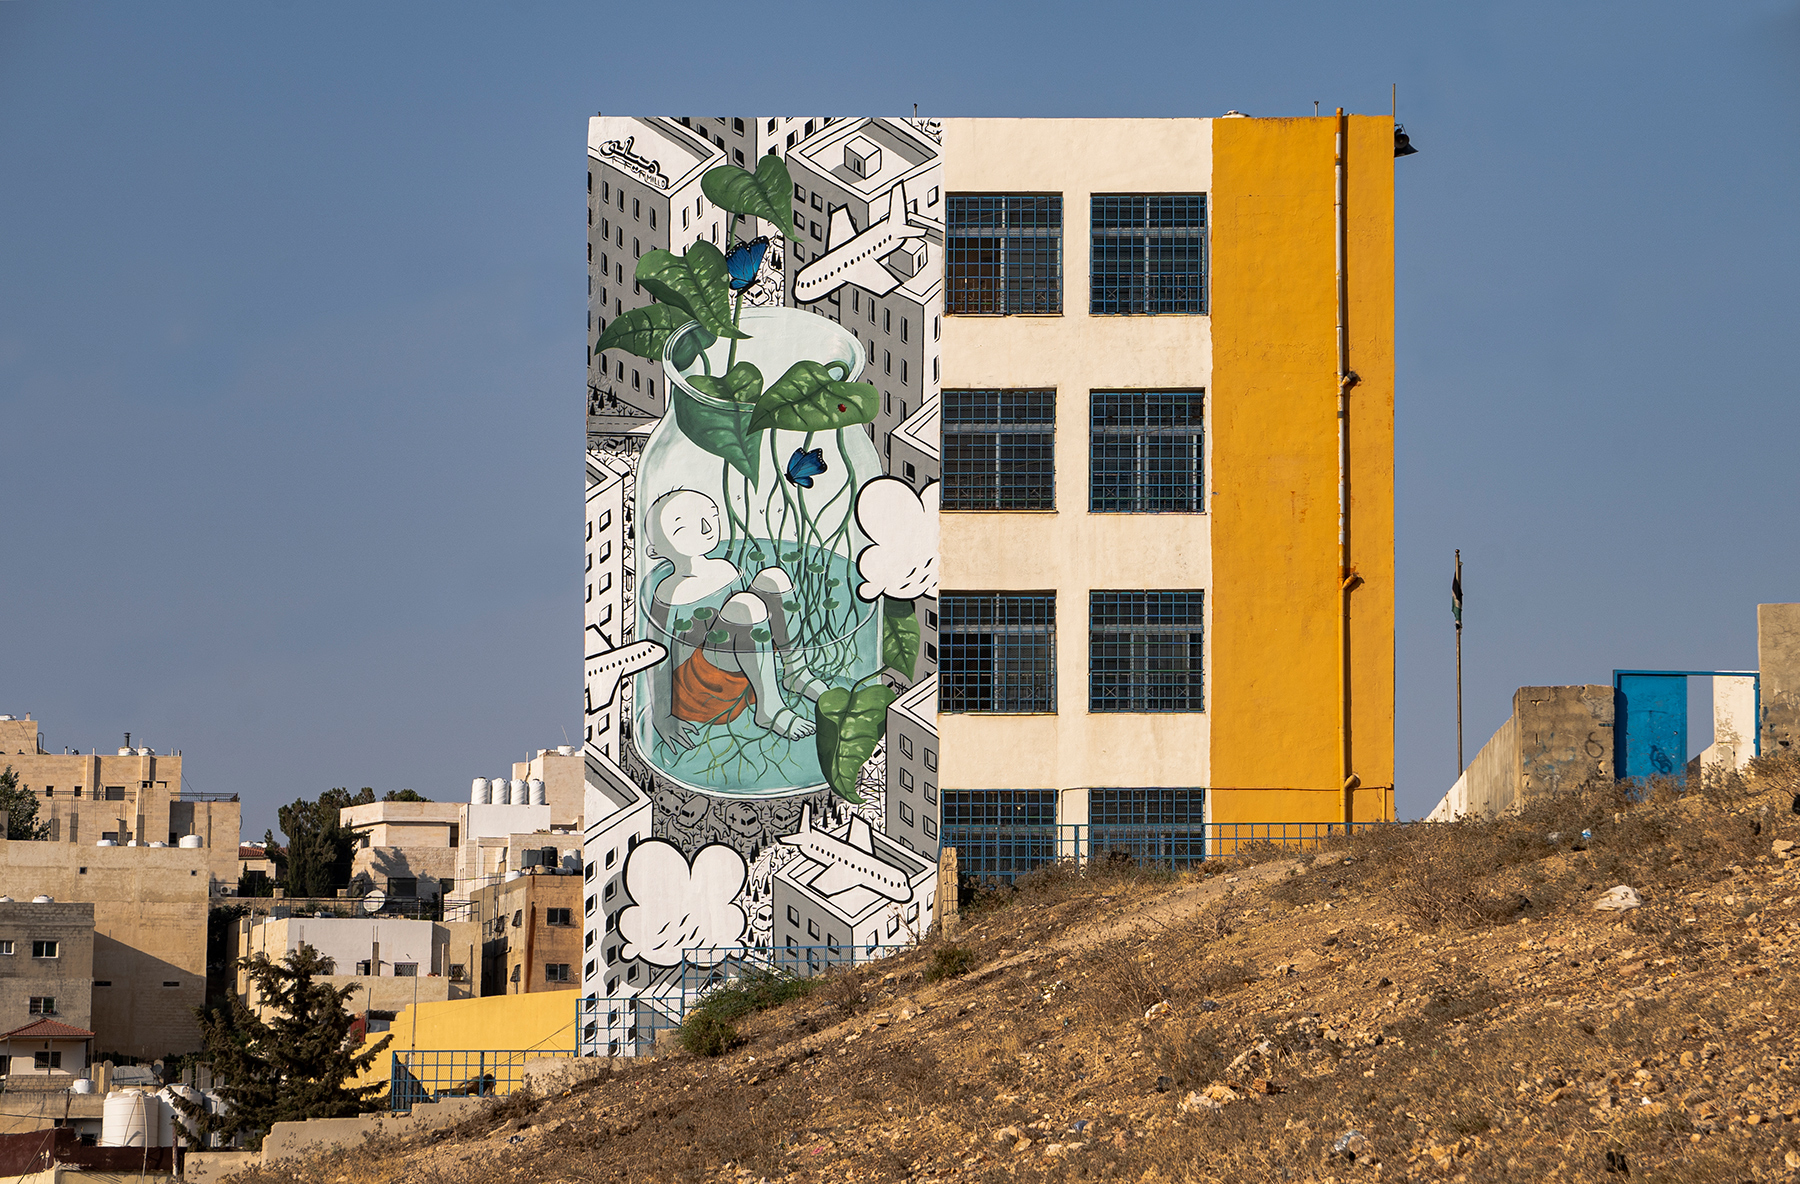 Millo’s New Mural “Essential” Brings Attention to Jordan’s Water Crisis In the heart of Amman, Jordan